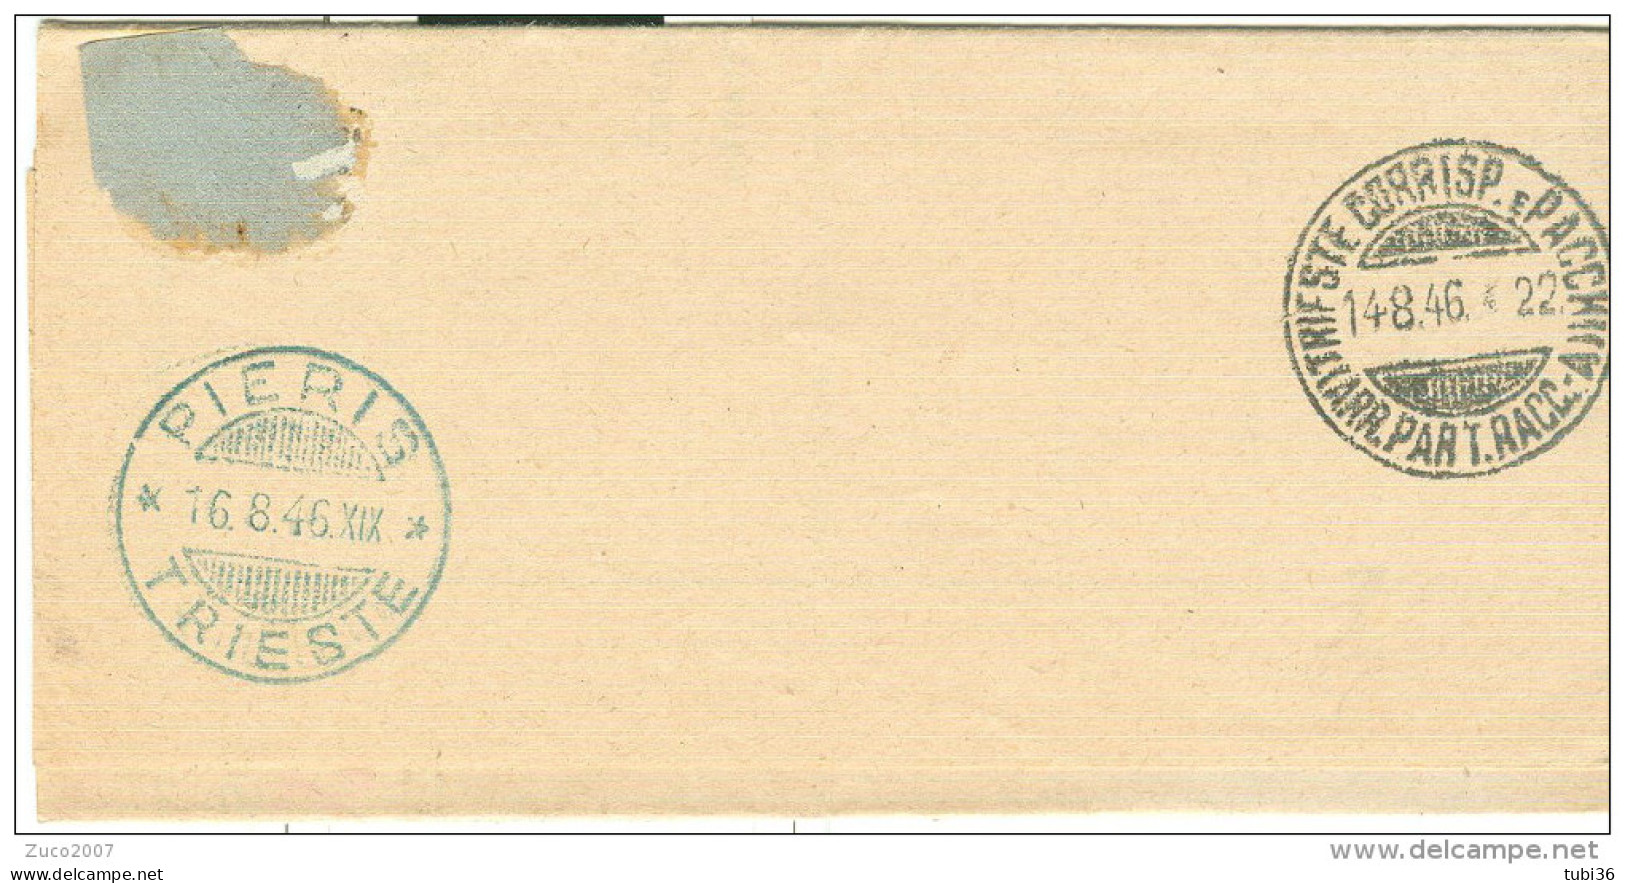 AMG-VG, IMP. £.10,VARIETA SOPRASTAMPA SPOSTATA ISOLATO IN TARIFFA MANO. RACC., 1946, POSTE MONFALCONE -PIERIS, TRIESTE - Poststempel